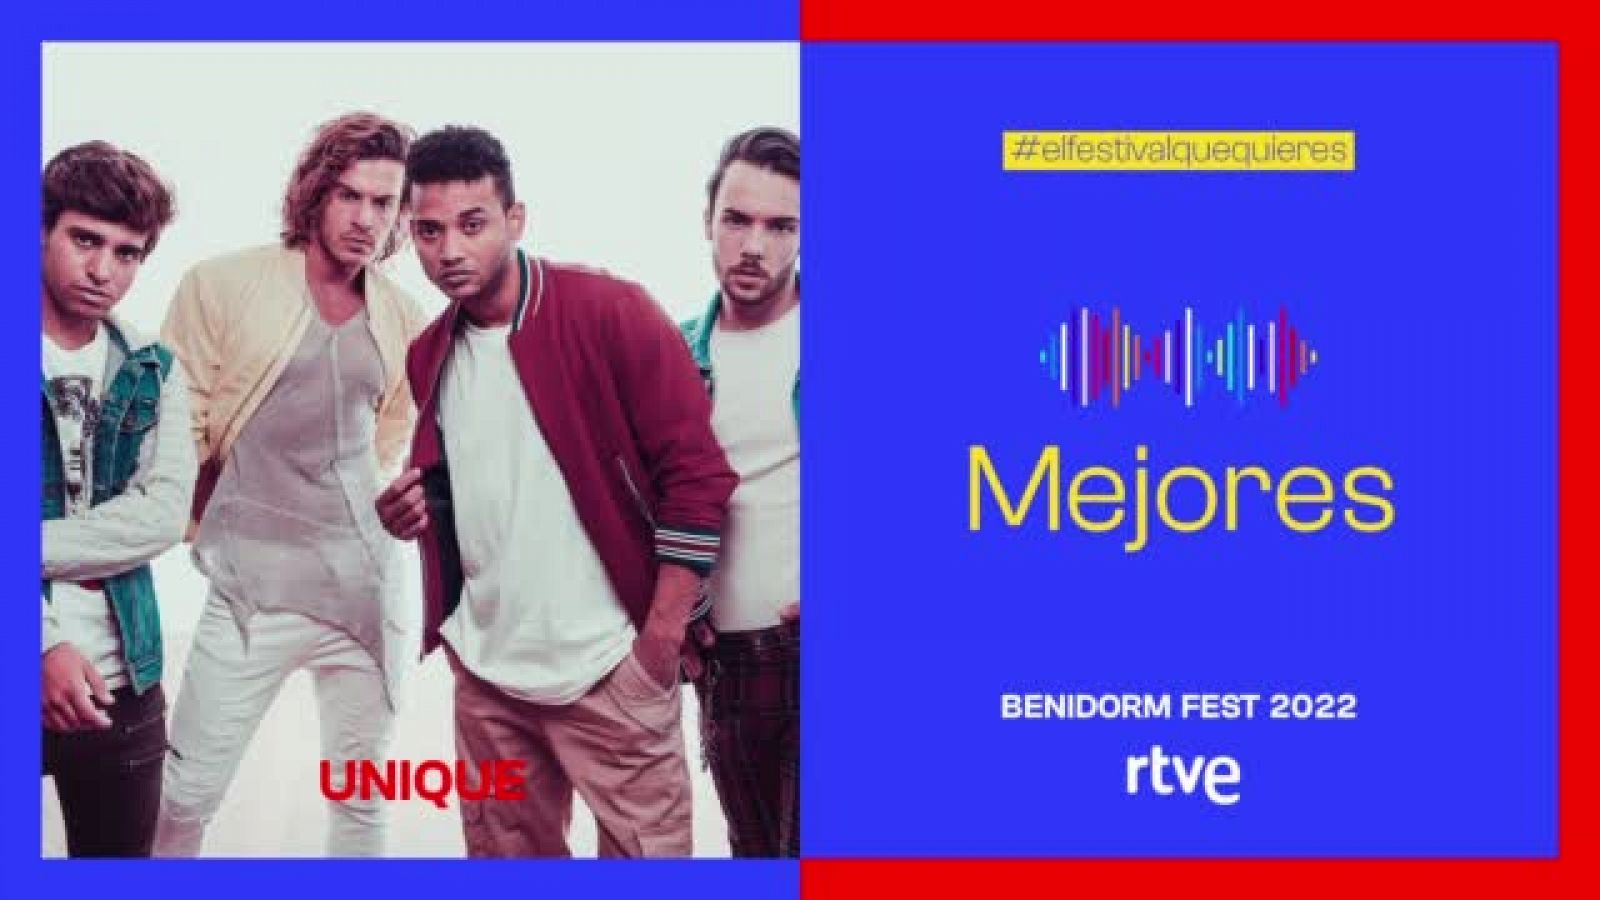 Benidorm Fest: Unique interpreta "Mejores"